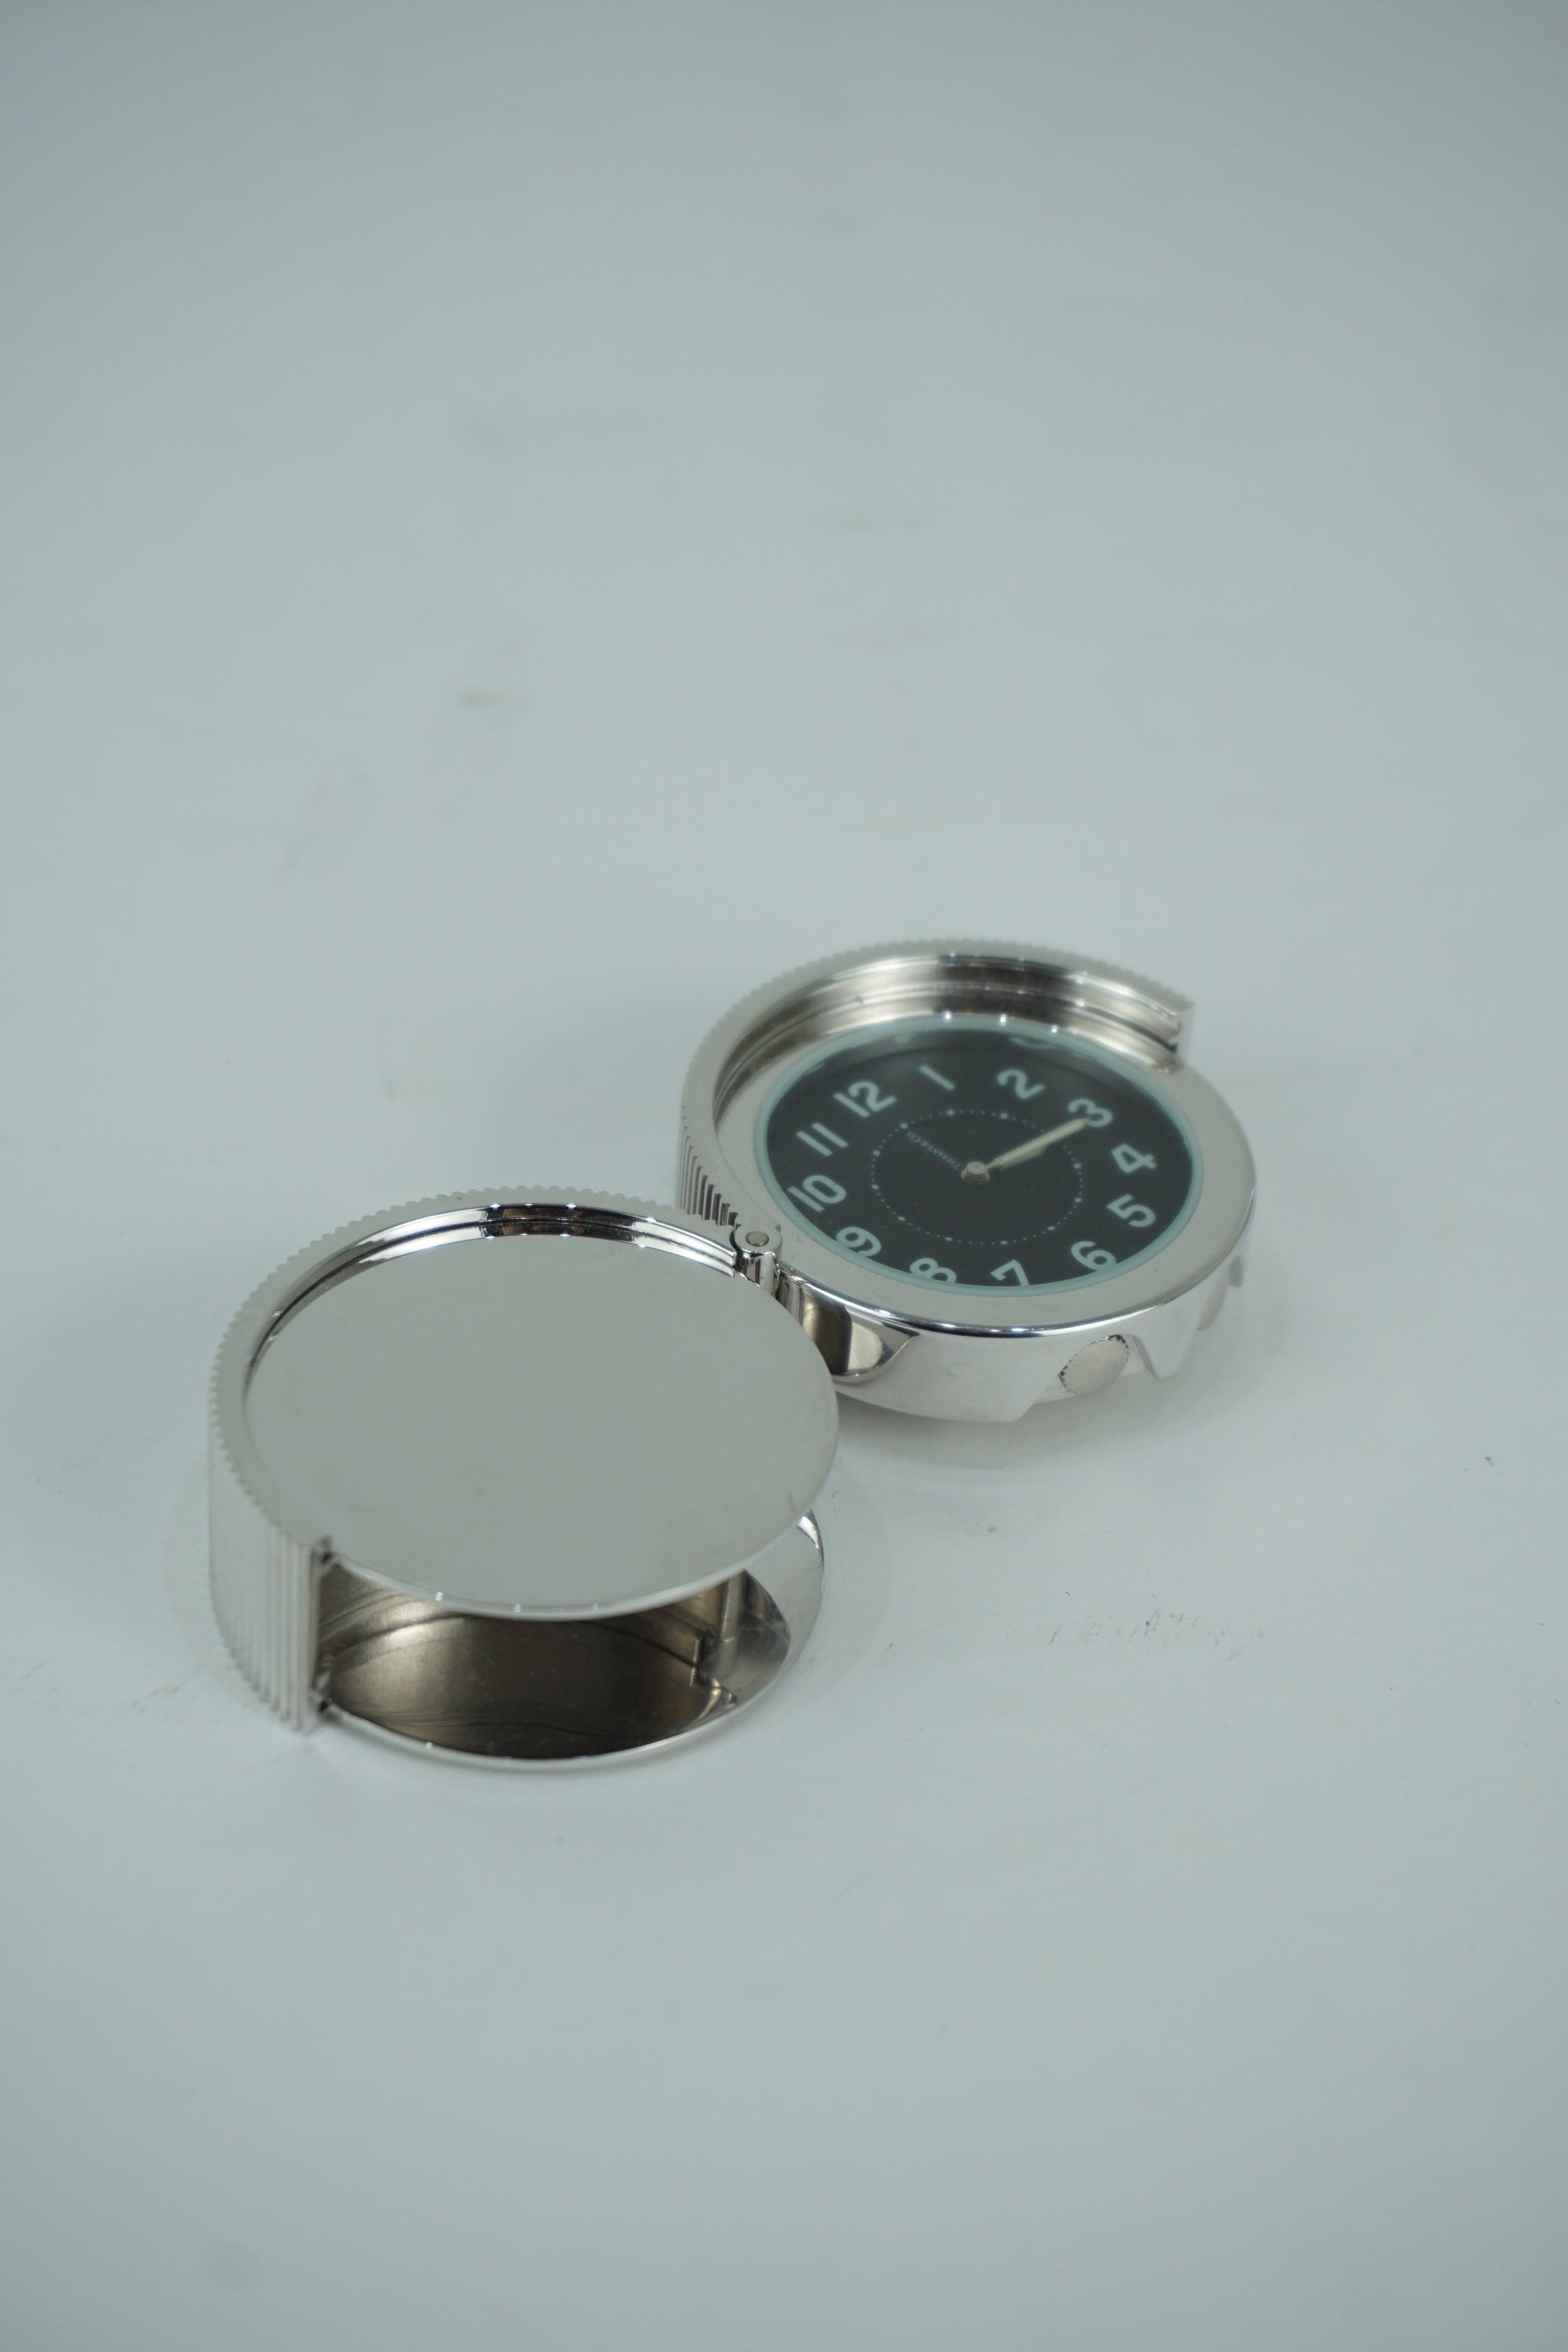 Tiffany & Co. Sterling Silver Small Travel Clock NIB